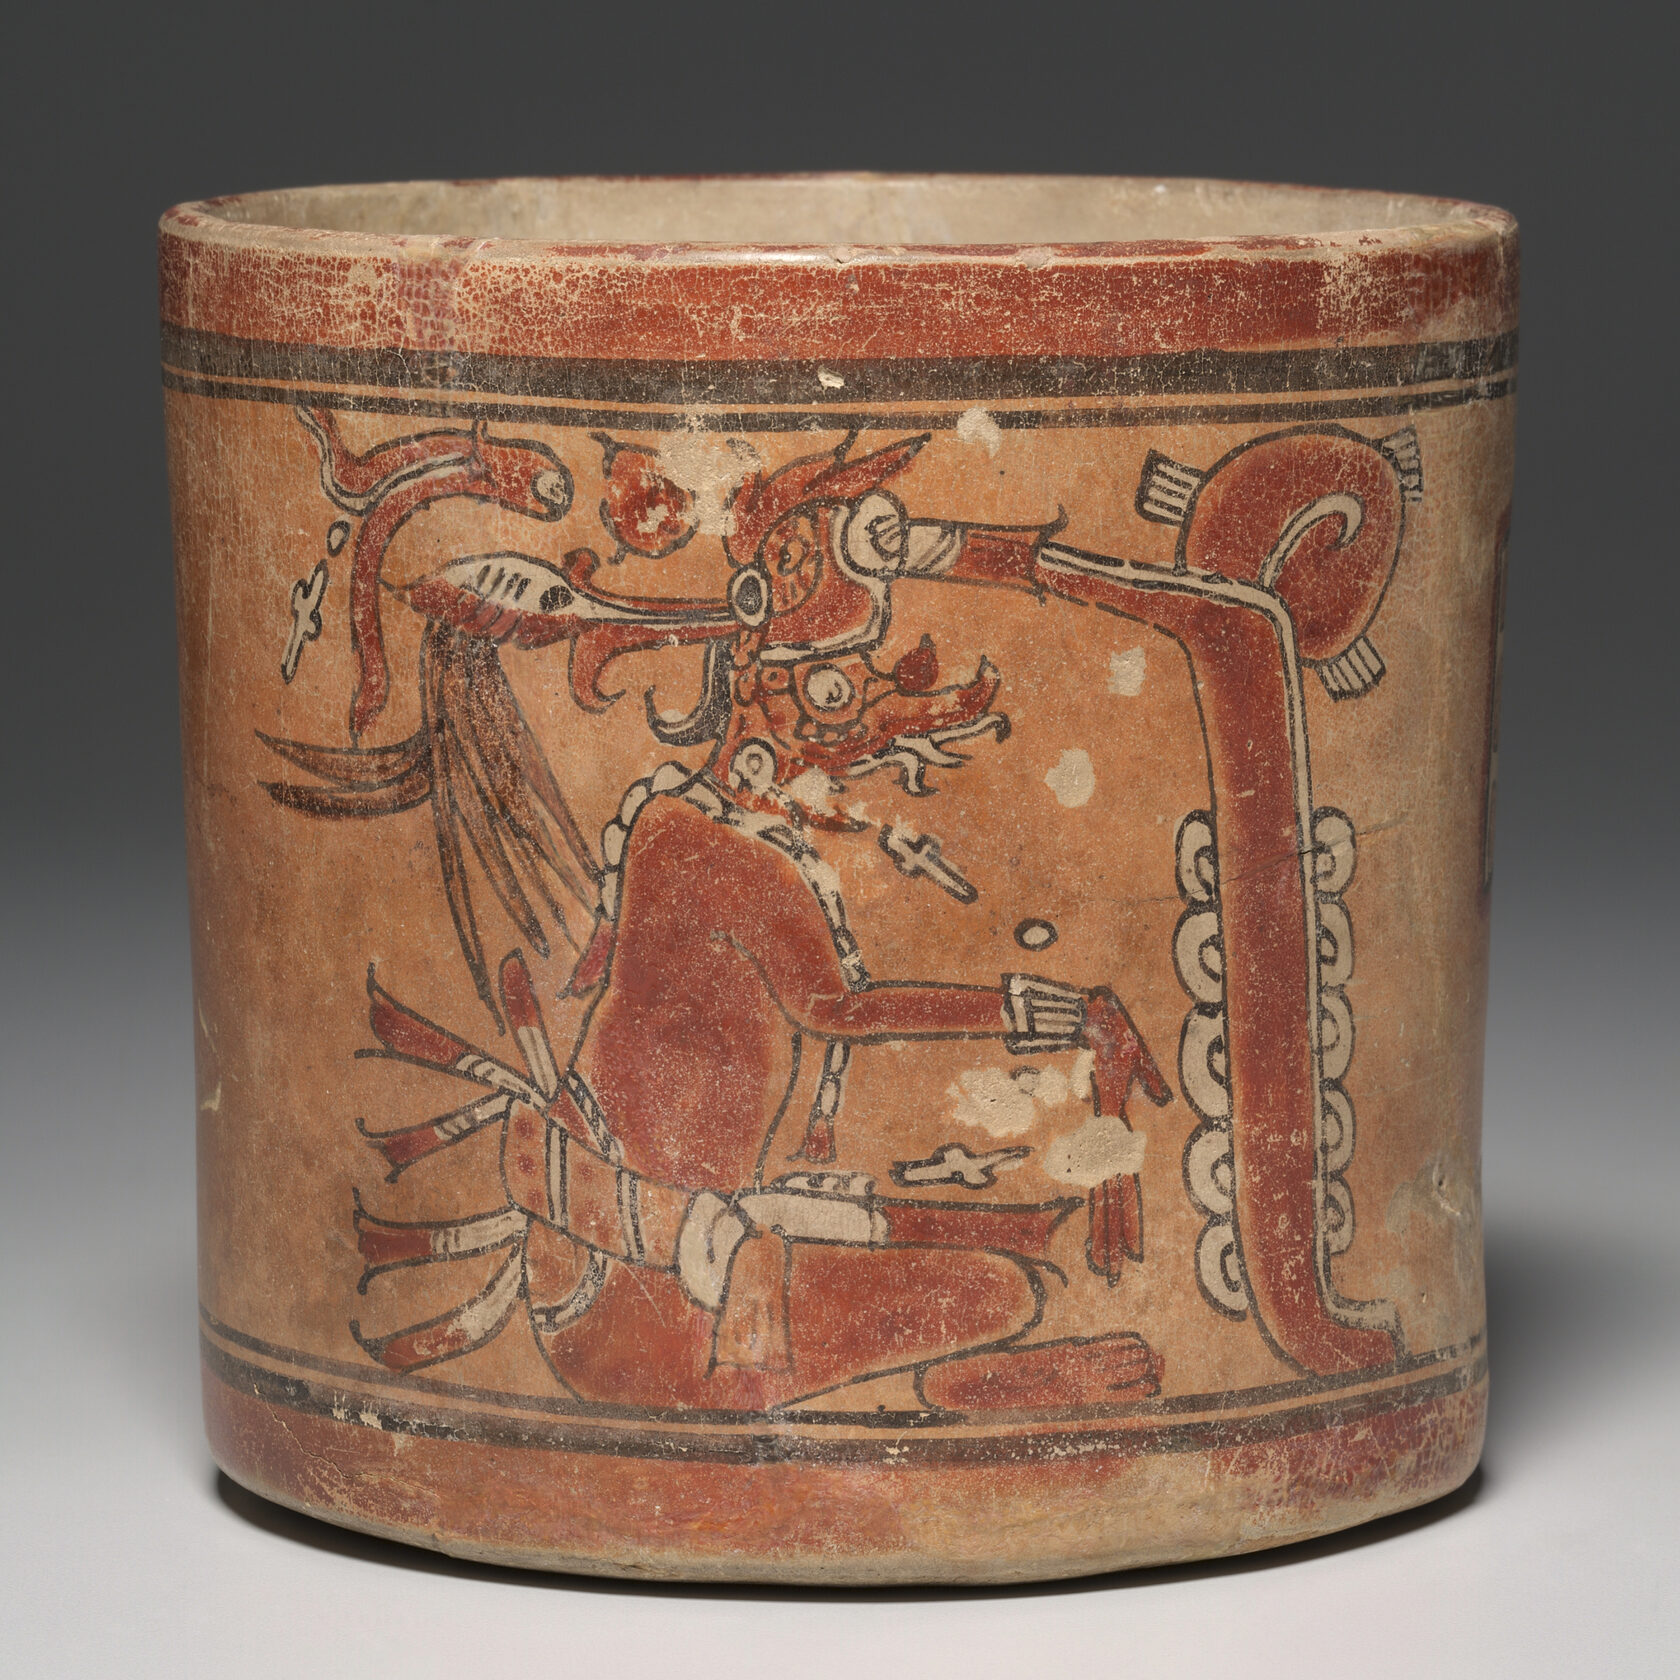 Сосуд с изображением бога молний (Кавиль, Бог К). Майя, 250-900 гг. н.э. Коллекция The Cleveland Museum of Art.